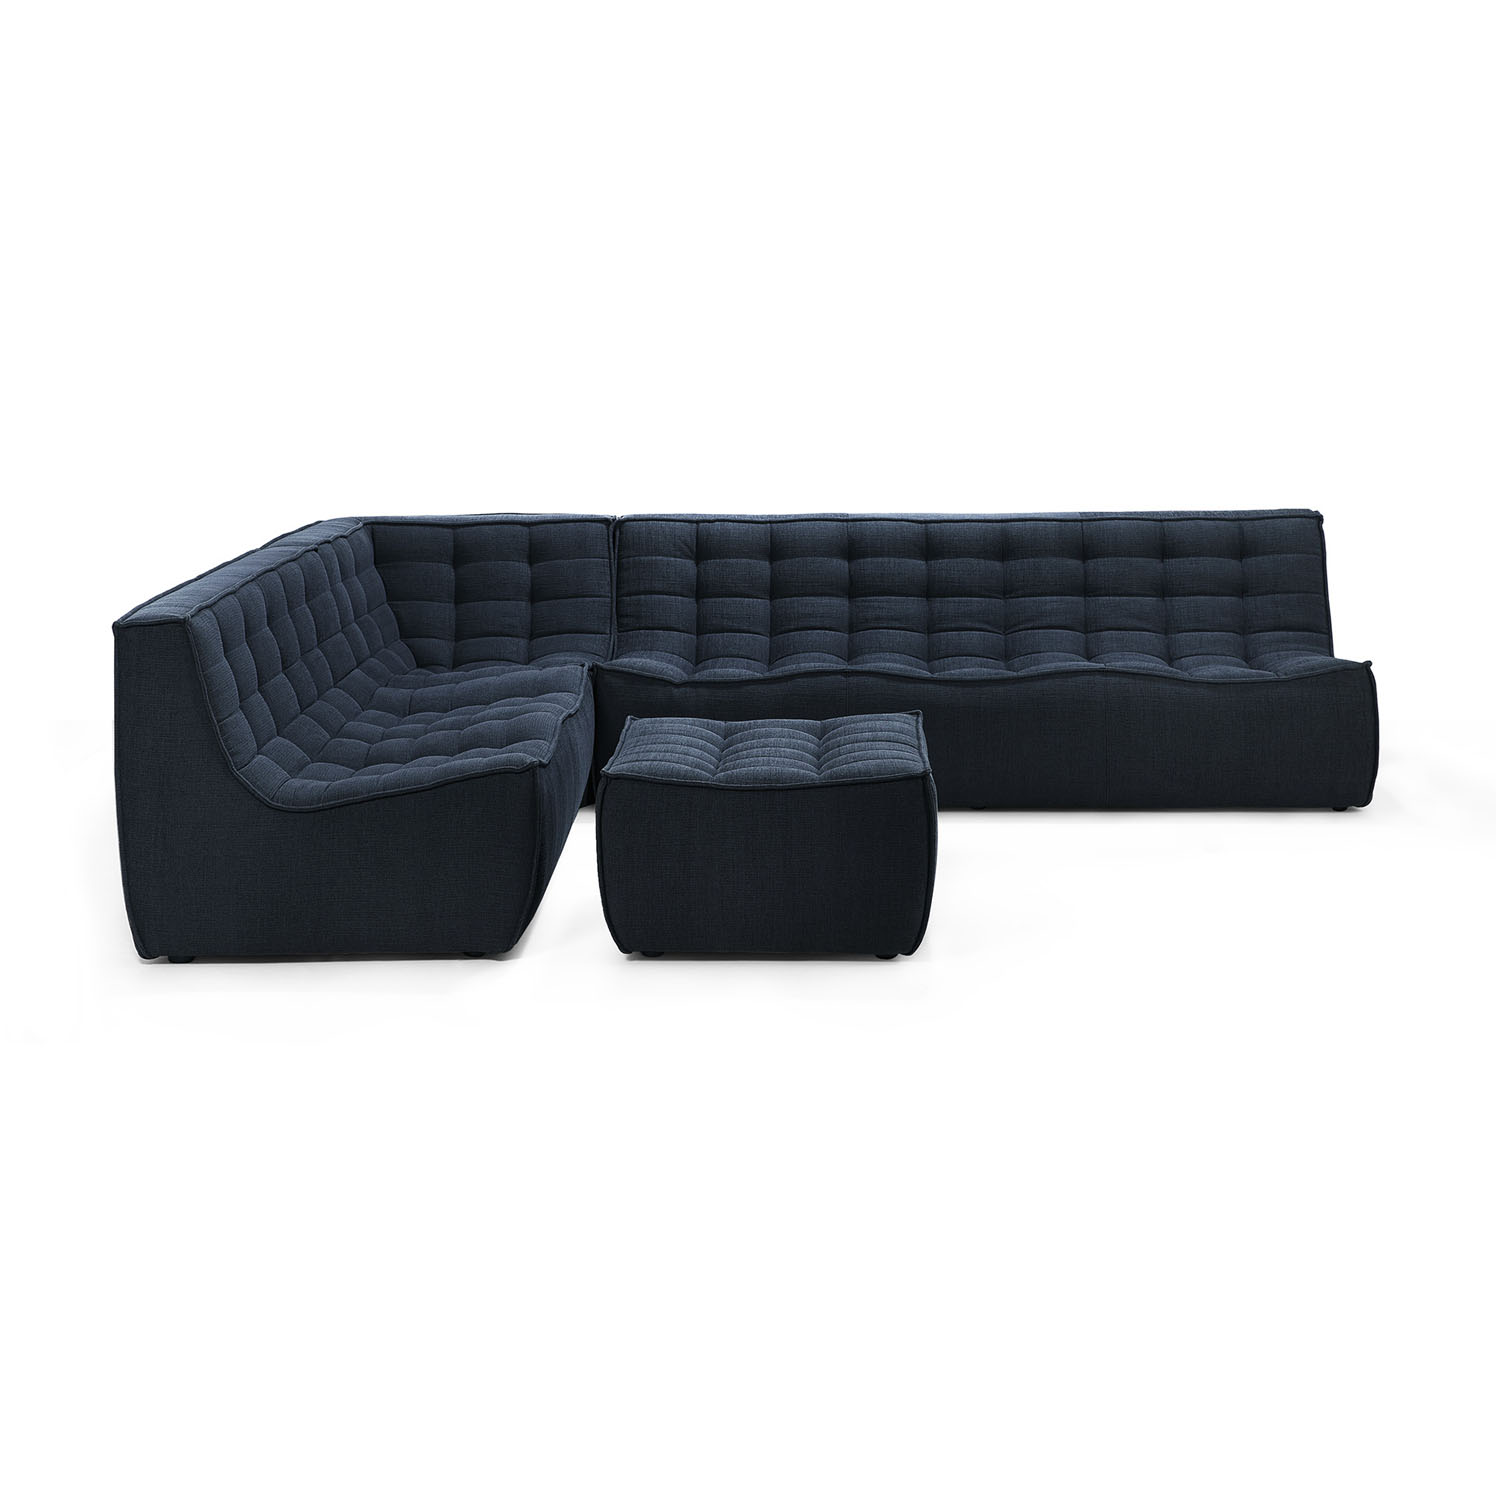 Sofa N 701 1 Sitzer graphite Eco Stoff 20222